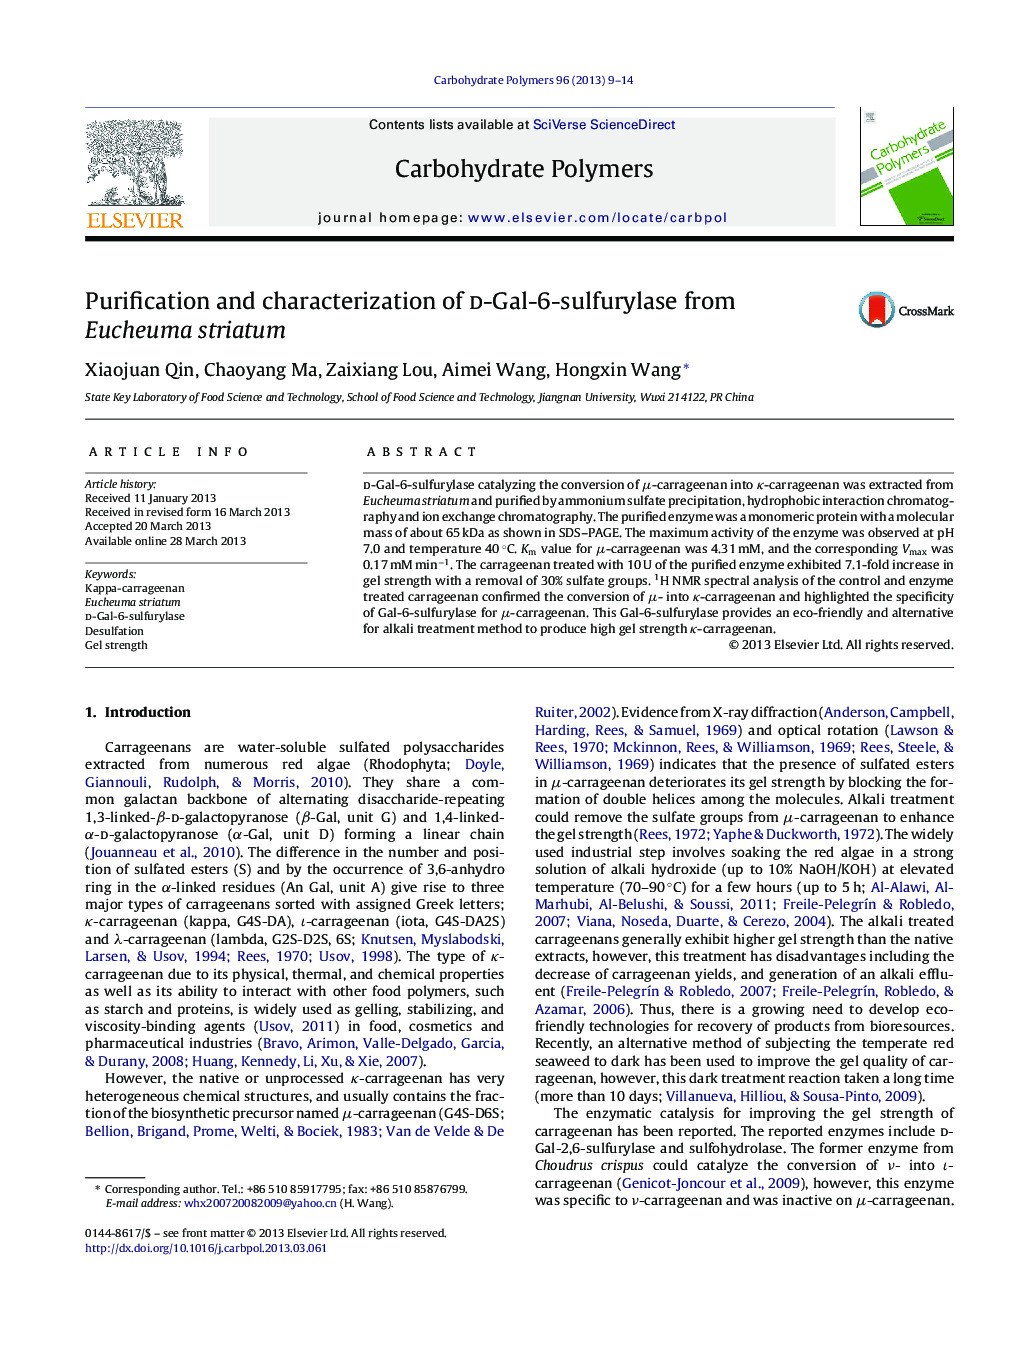 Purification and characterization of d-Gal-6-sulfurylase from Eucheuma striatum